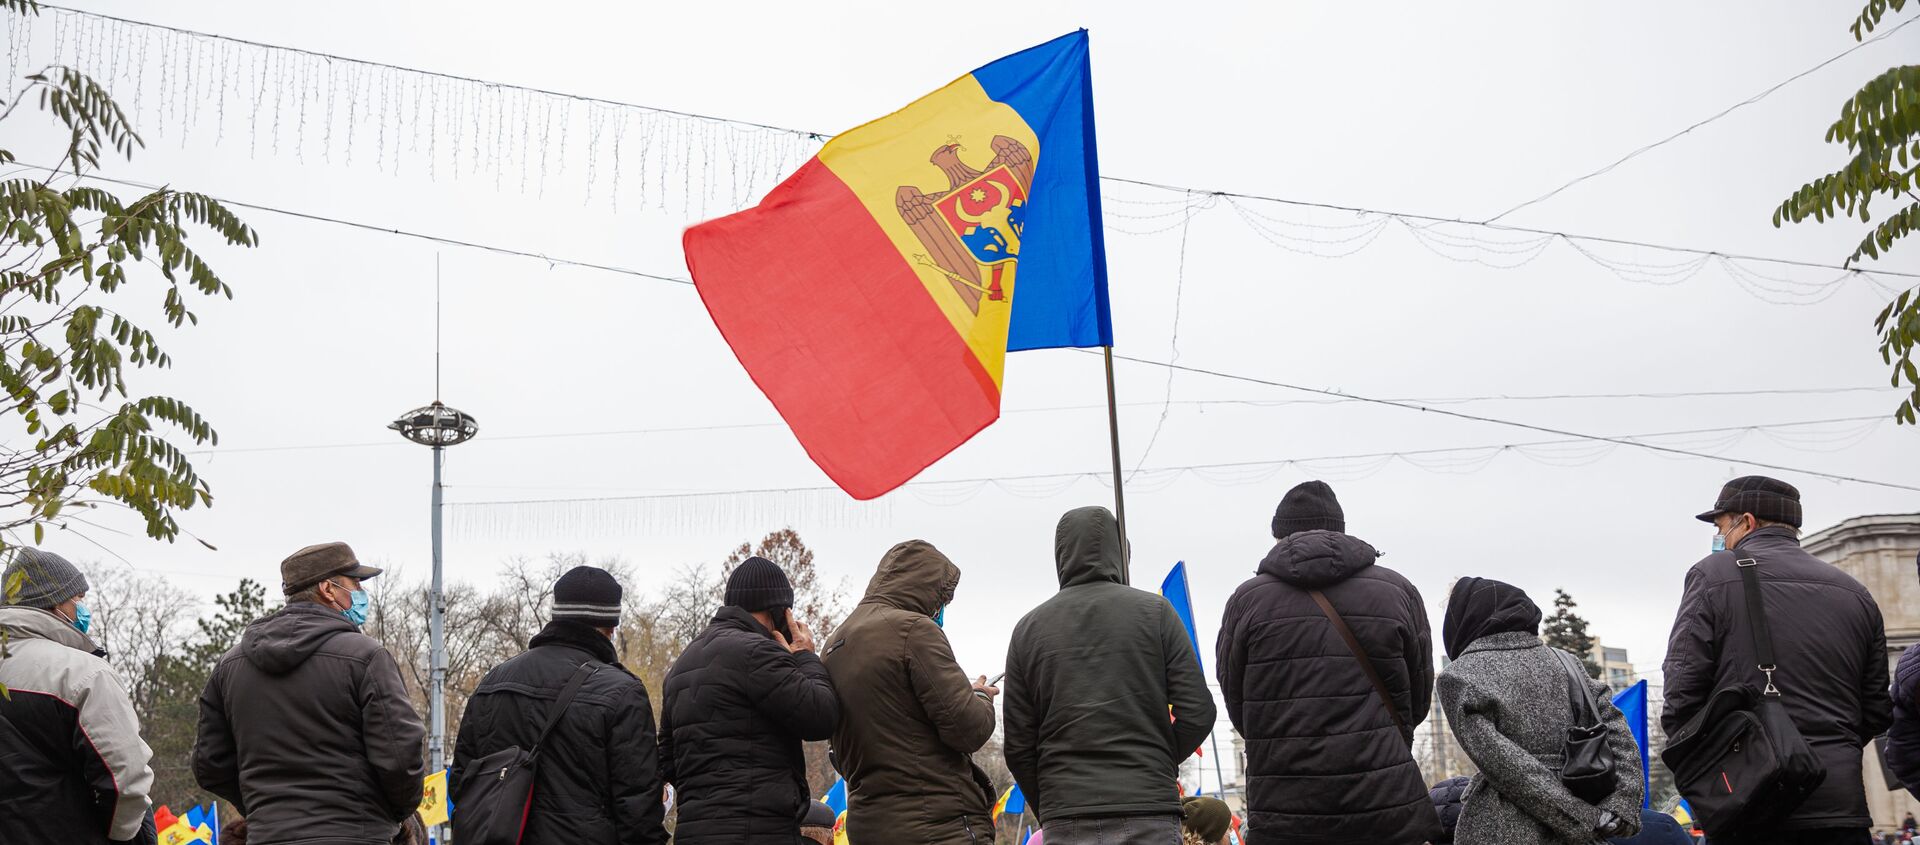  Протест в Кишиневе 6 декабря - Sputnik Moldova, 1920, 09.12.2020